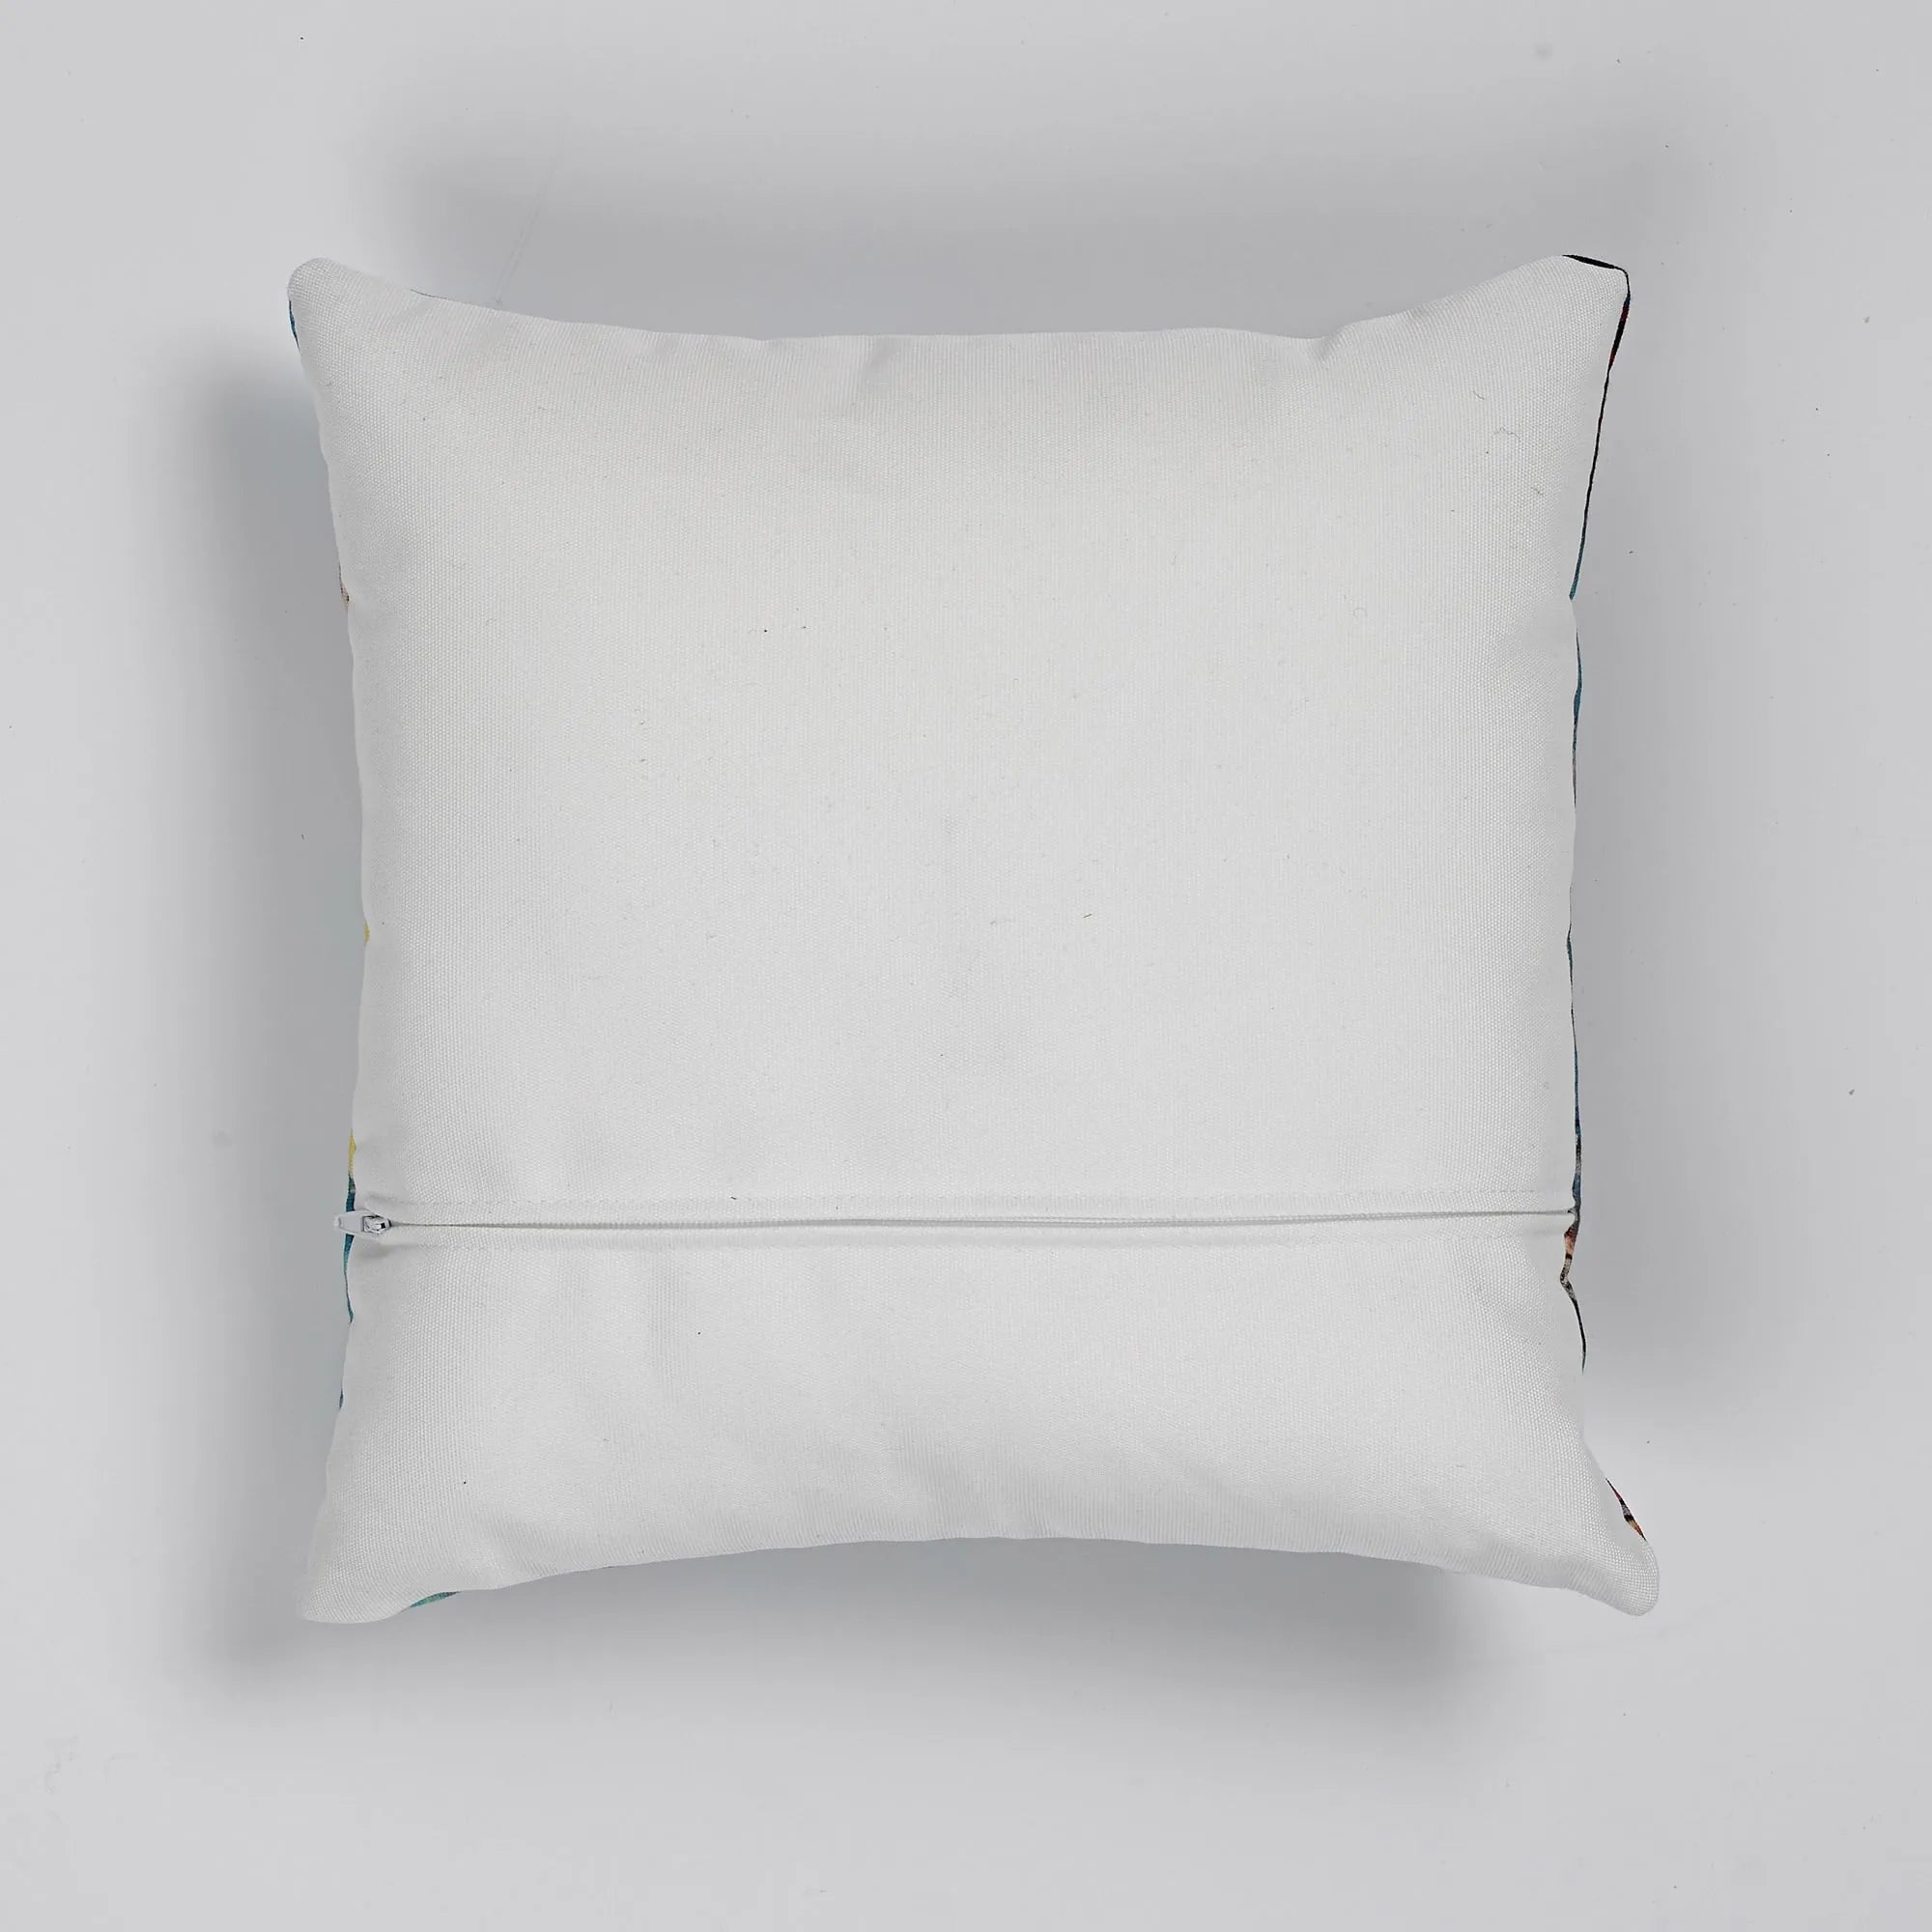 Jasmine - William Morris Cushion - Decorative Throw Pillow - Throw Pillows - Aesthetic Art